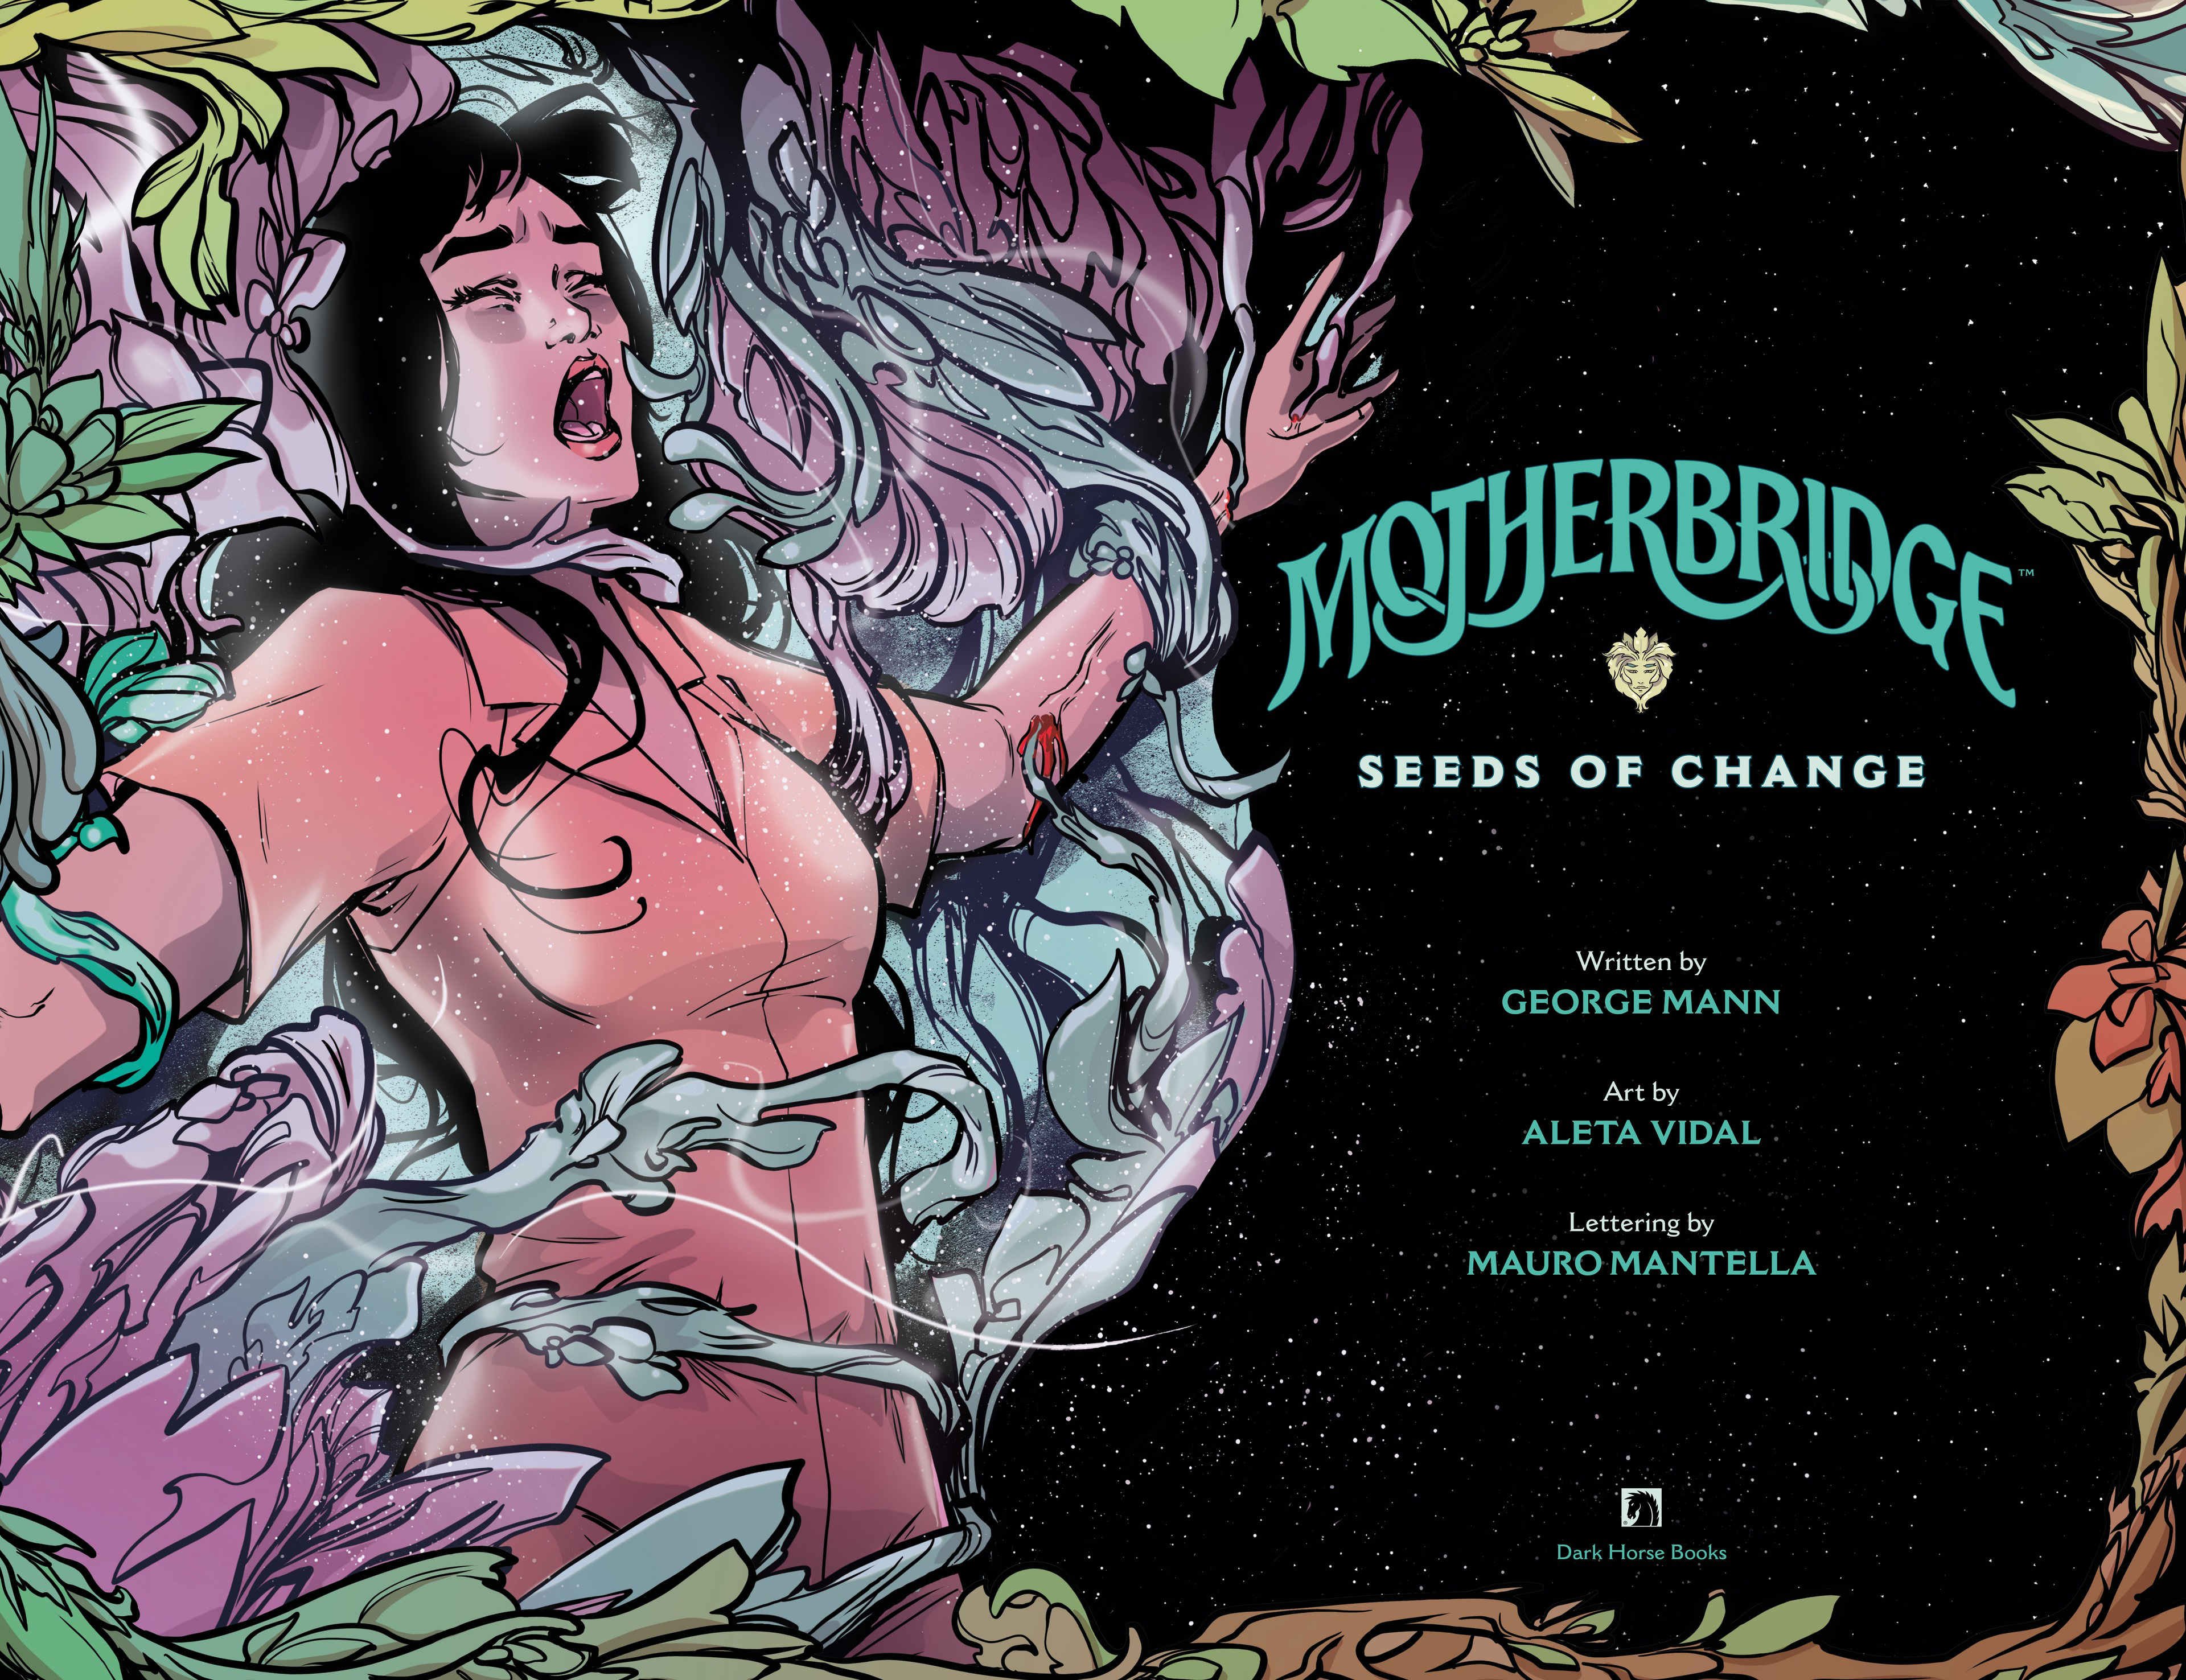 Read online Motherbridge: Seeds of Change comic -  Issue # TPB - 4